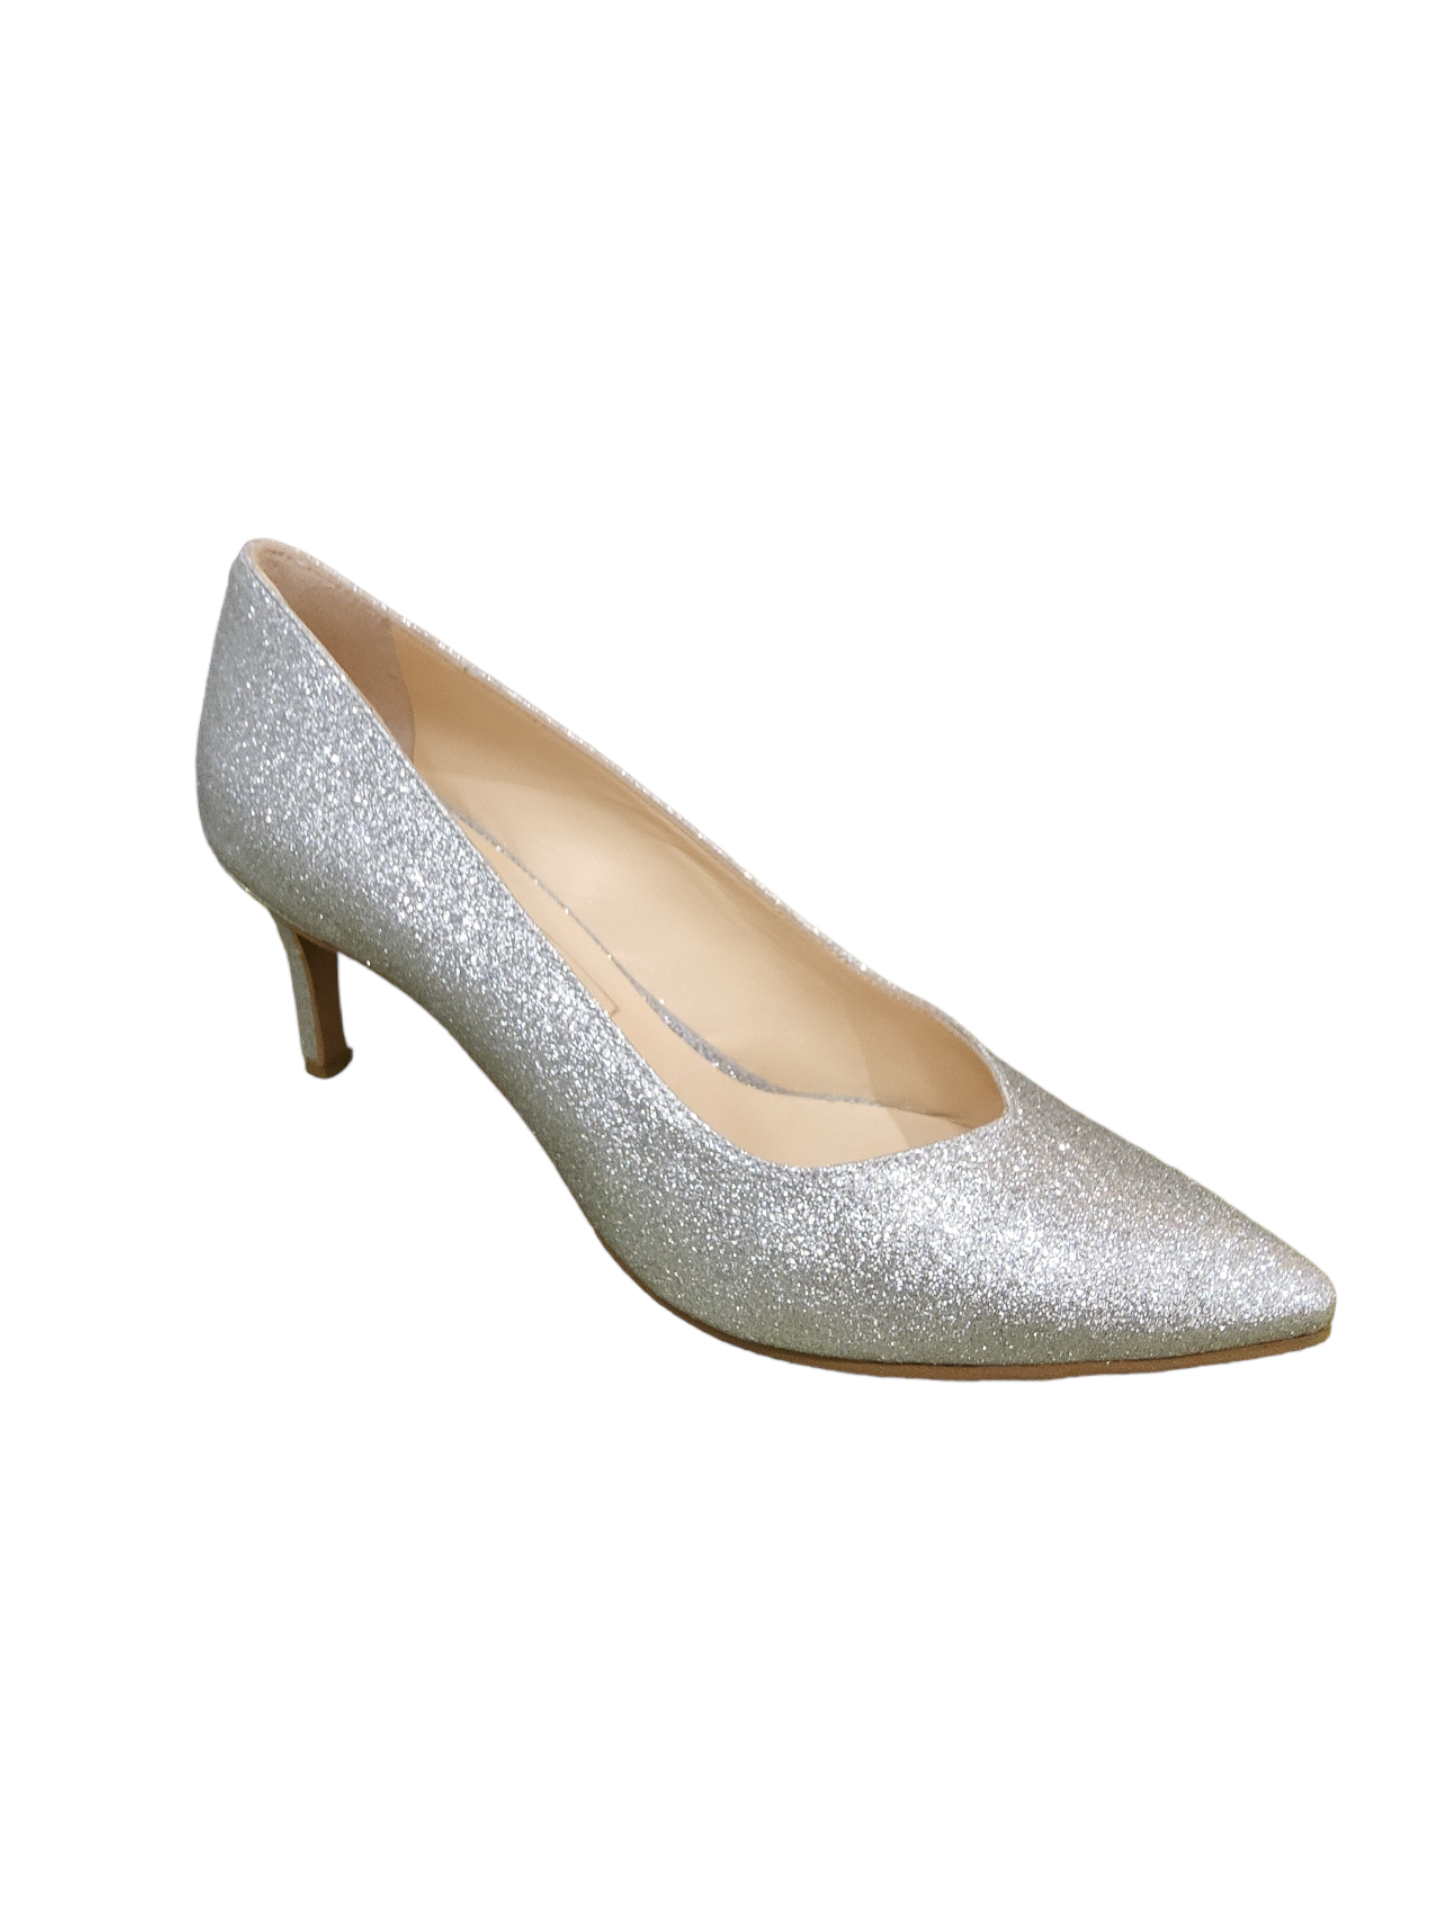 Silver Sparkle leather shoe